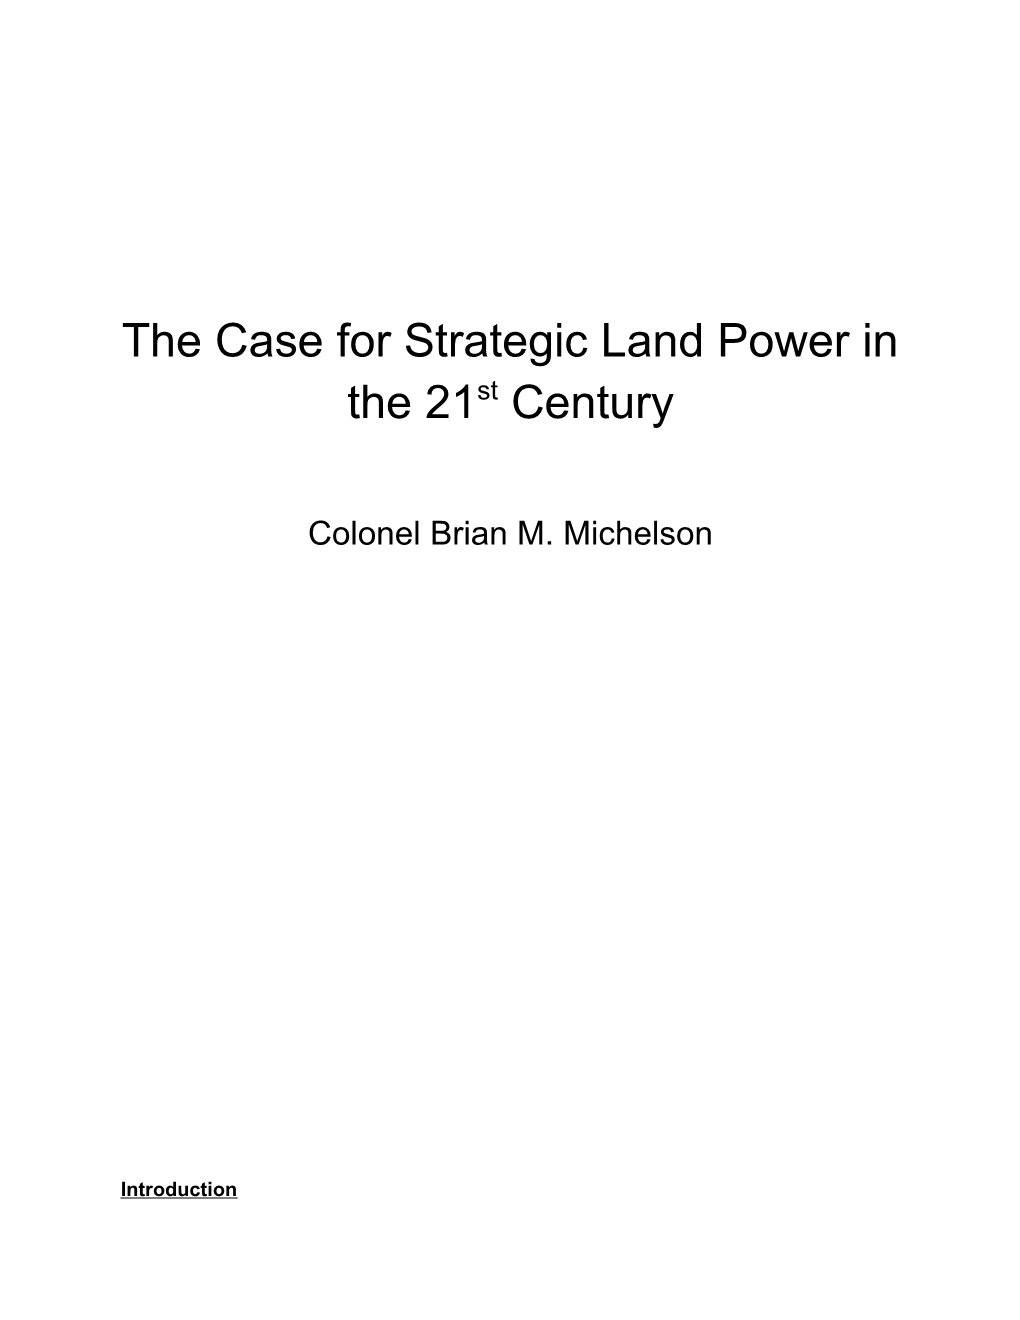 Strategic Land Power in the 21St Century